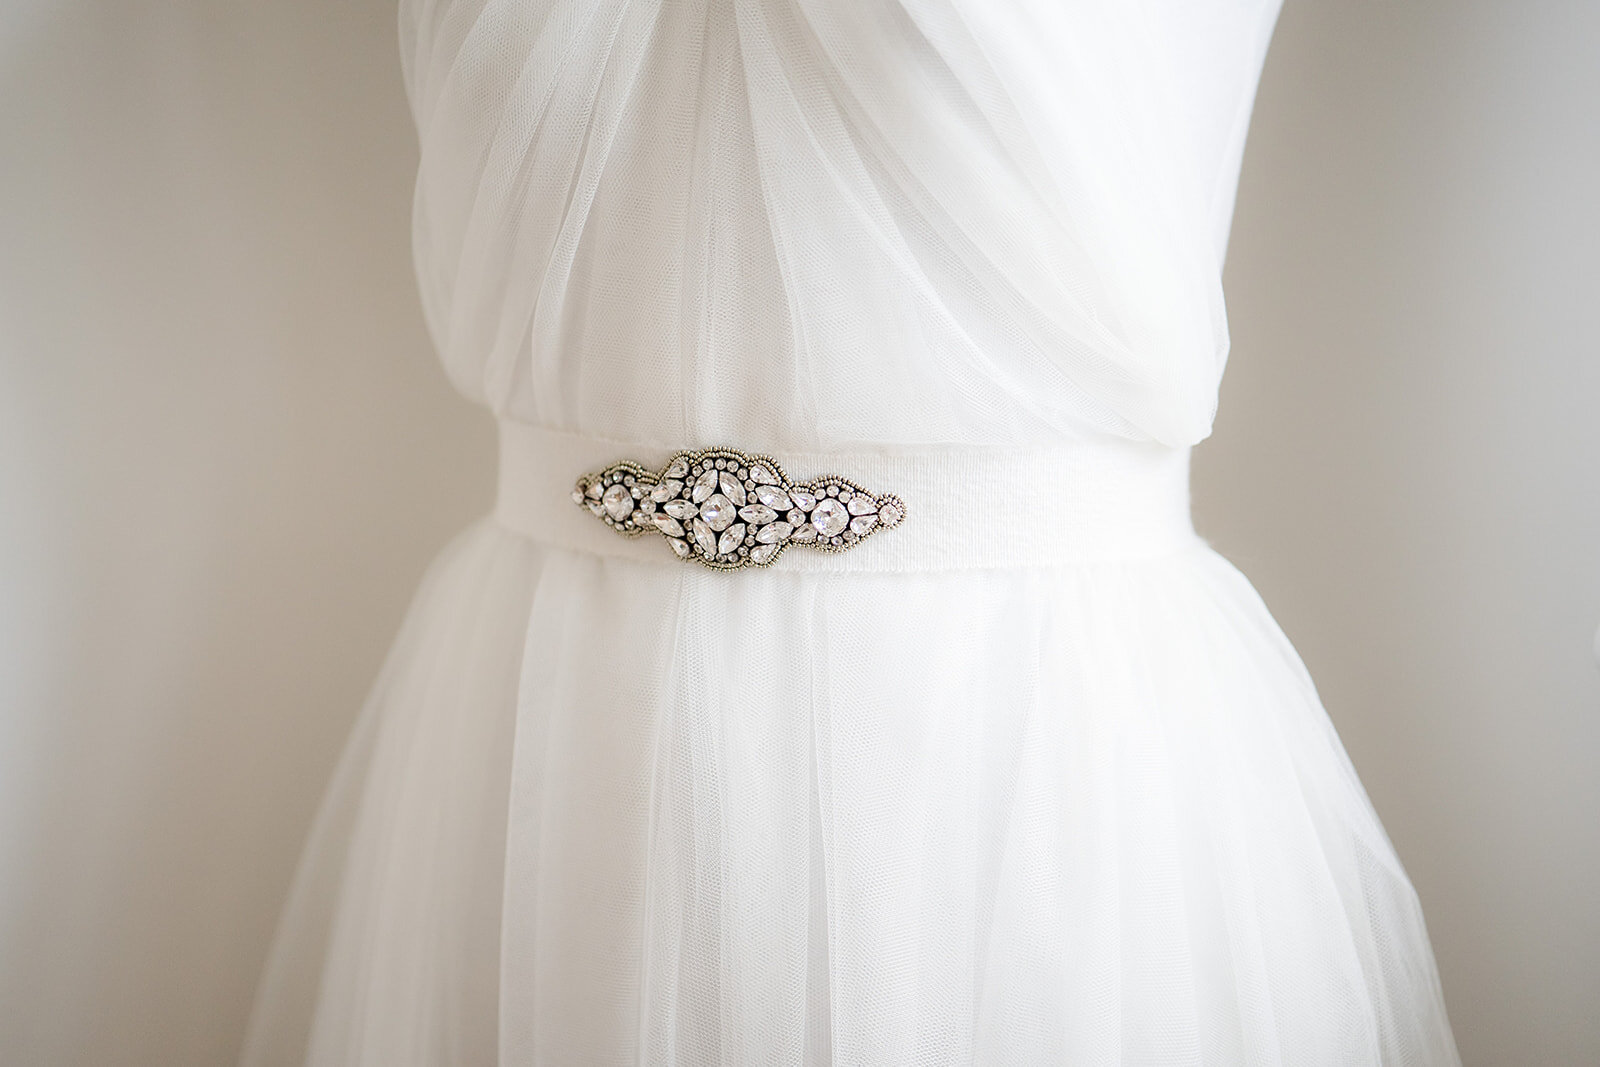 Victoria Fergusson luxury hand crafted bridal accessories atelier (30).jpg